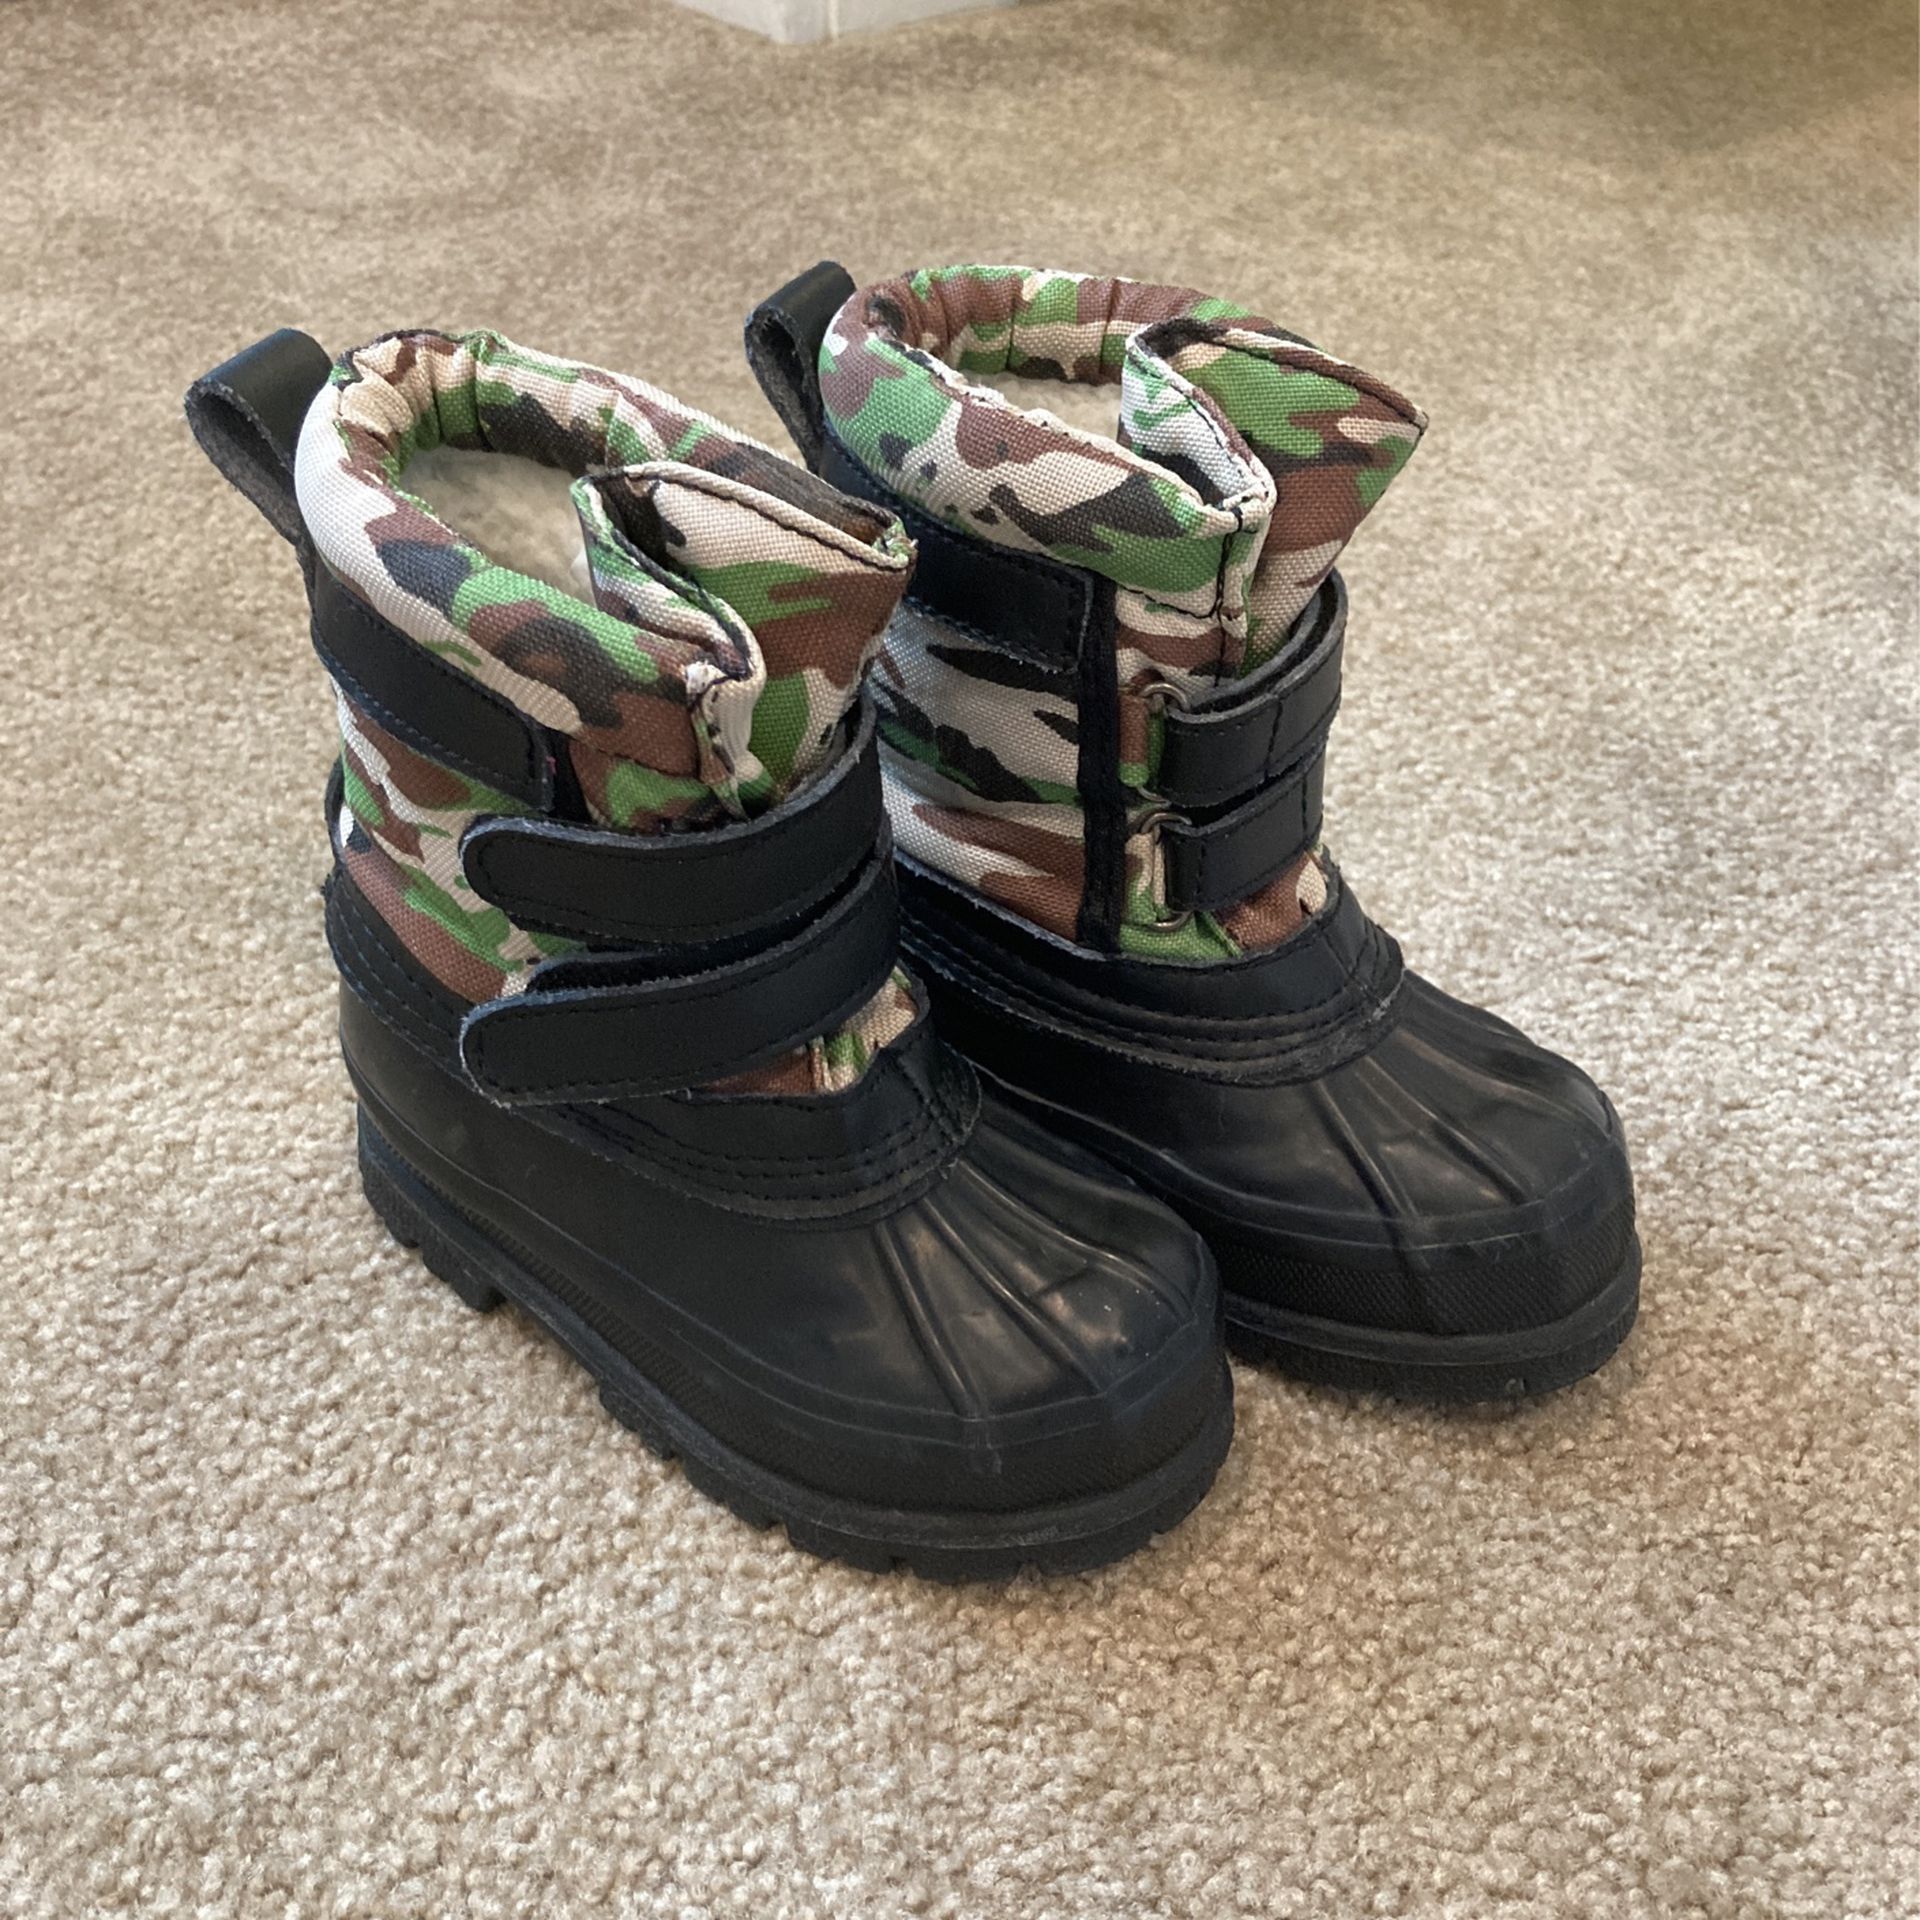 8c Snow Boots